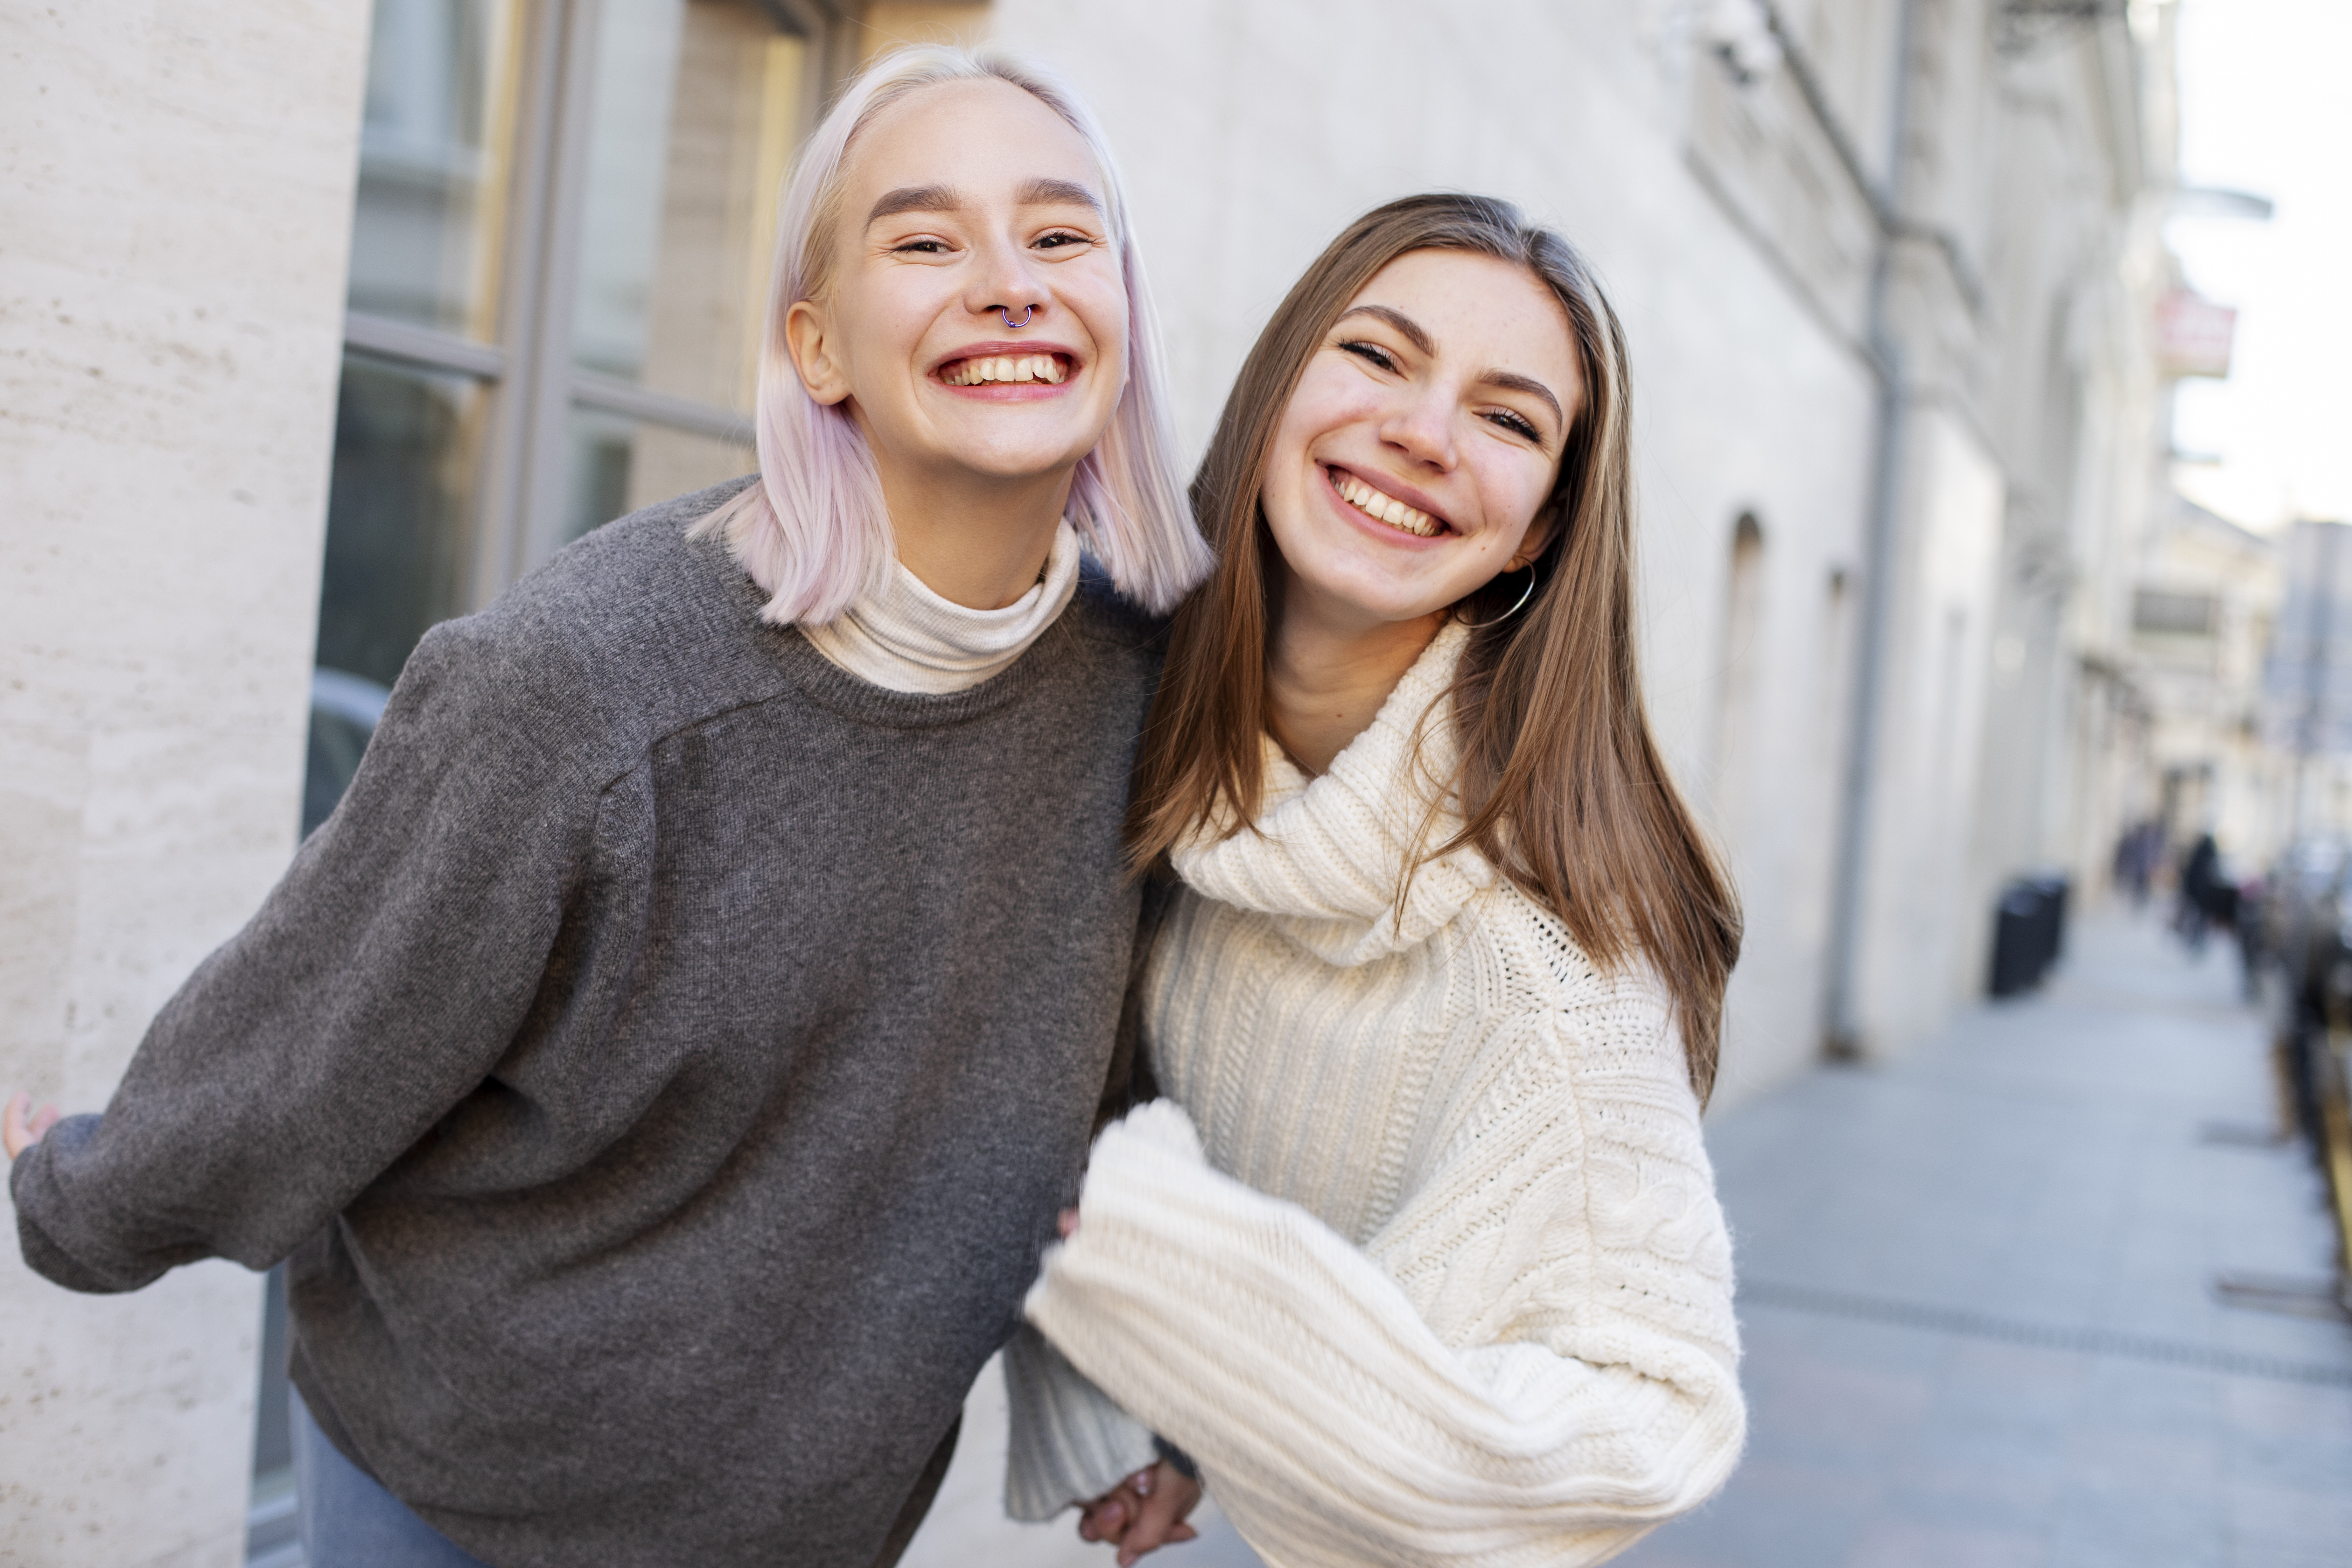 Women Outdoors Sweater Smiling White Hair Brunette Sidewalks Two Women Pierced Nose 6720x4480